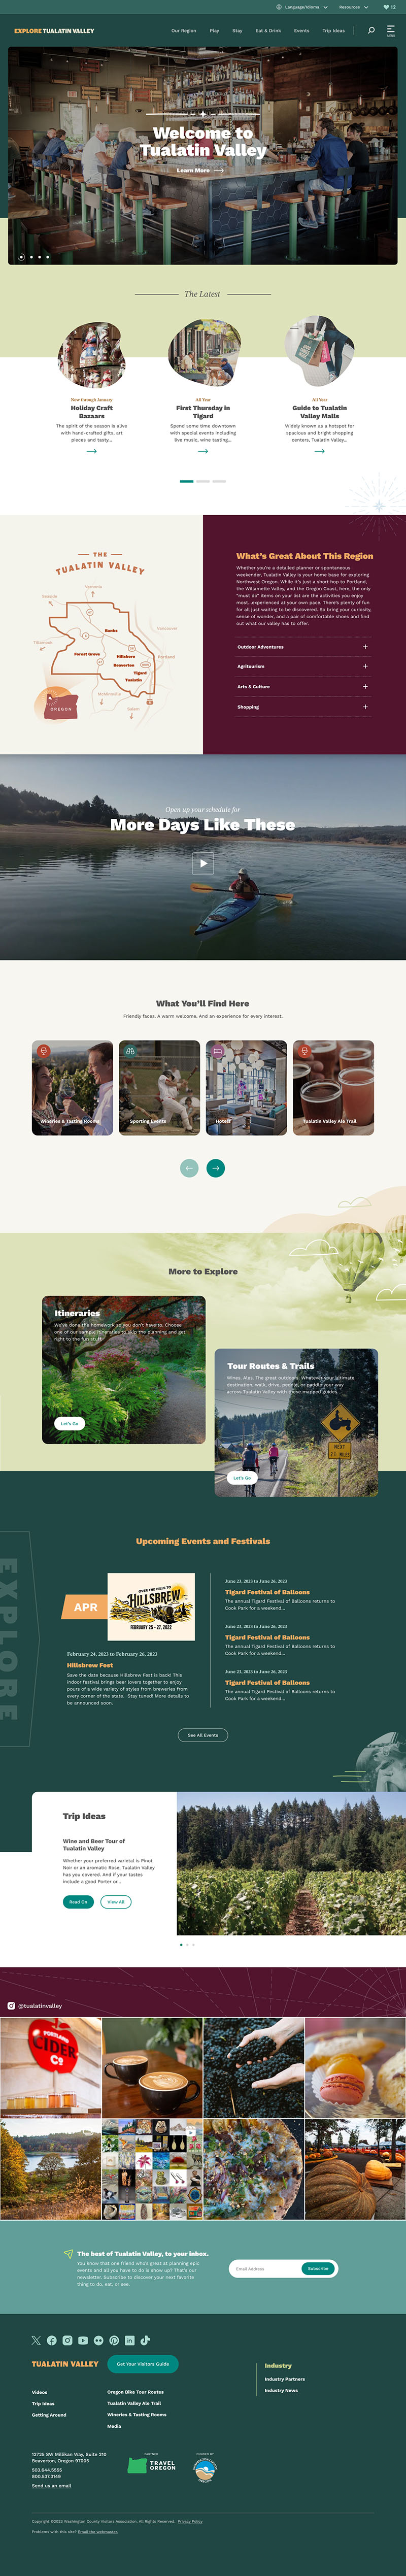 Web design home page explore tualatin valley